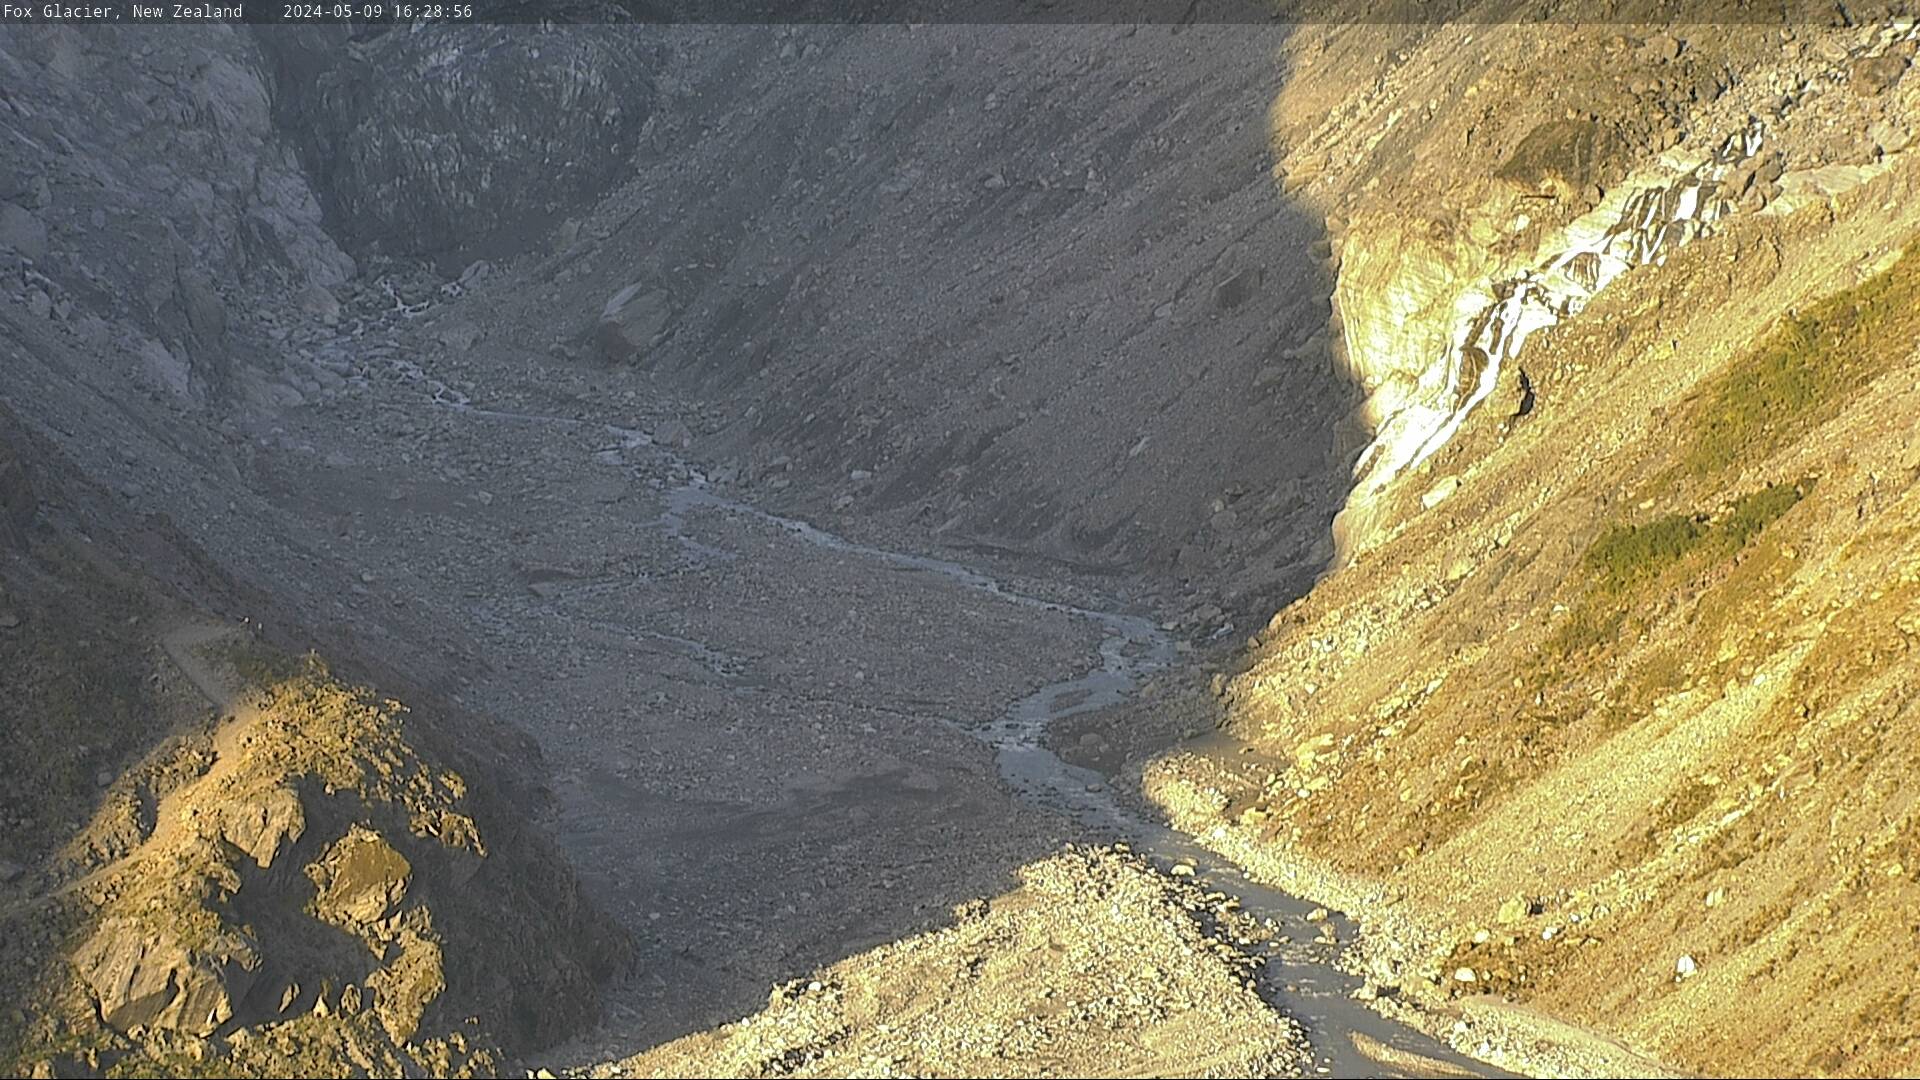 Latest image from Fox Glacier web cam